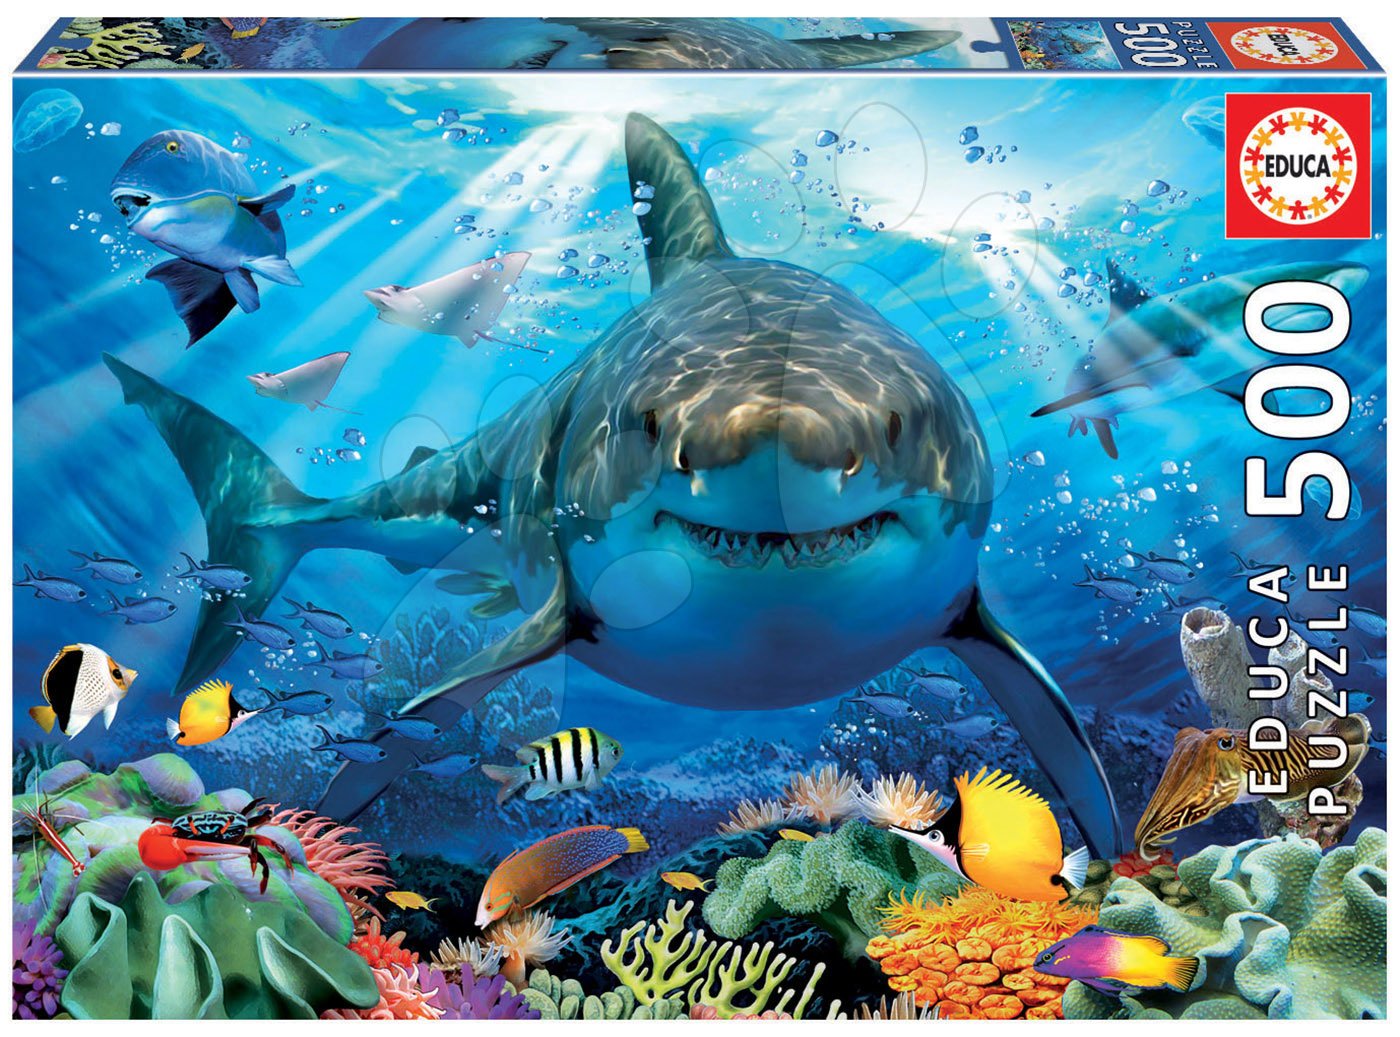 Puzzle Great White Shark Educa 500 dílků a Fix lepidlo od 11 let